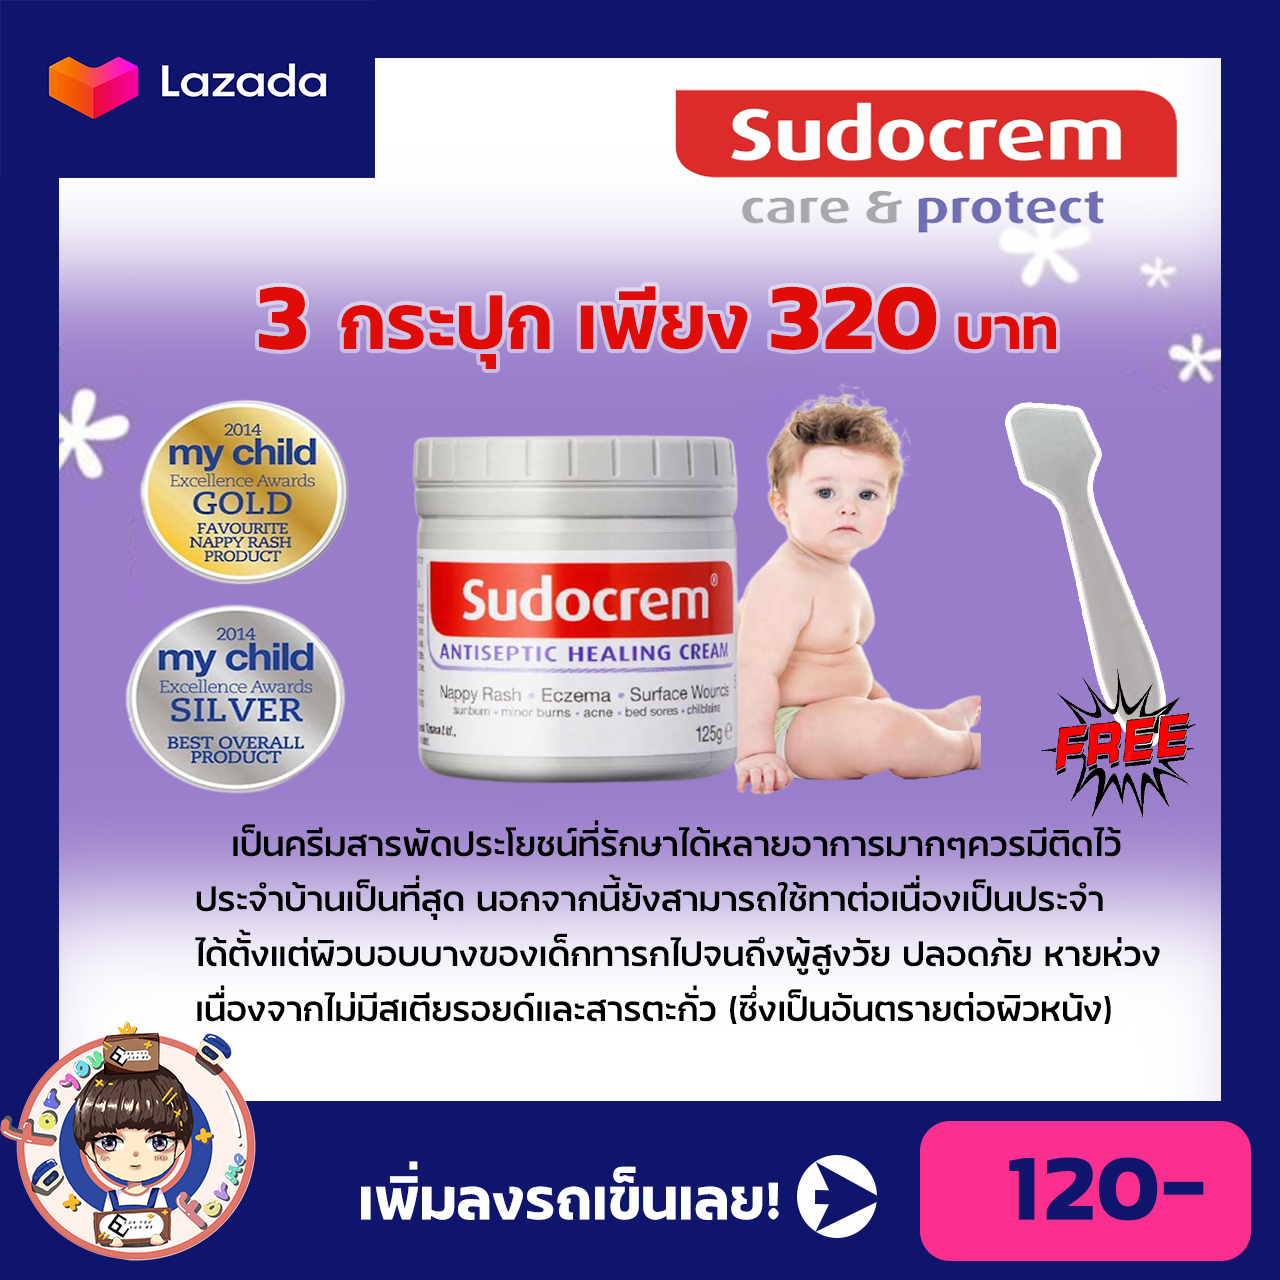 Sudocream Sudo cream ซูโดครีม ซูโด ขนาด125กรัม แก้ผื่นผ้าอ้อม ผิวแห้ง แก้ผดผื่นสำหรับทารก